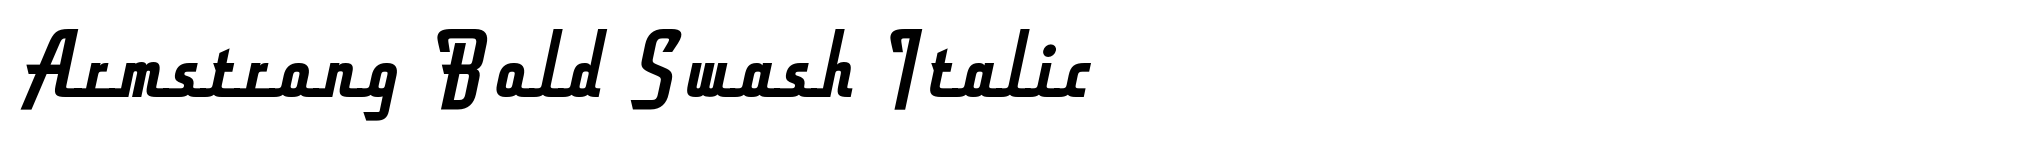 Armstrong Bold Swash Italic image